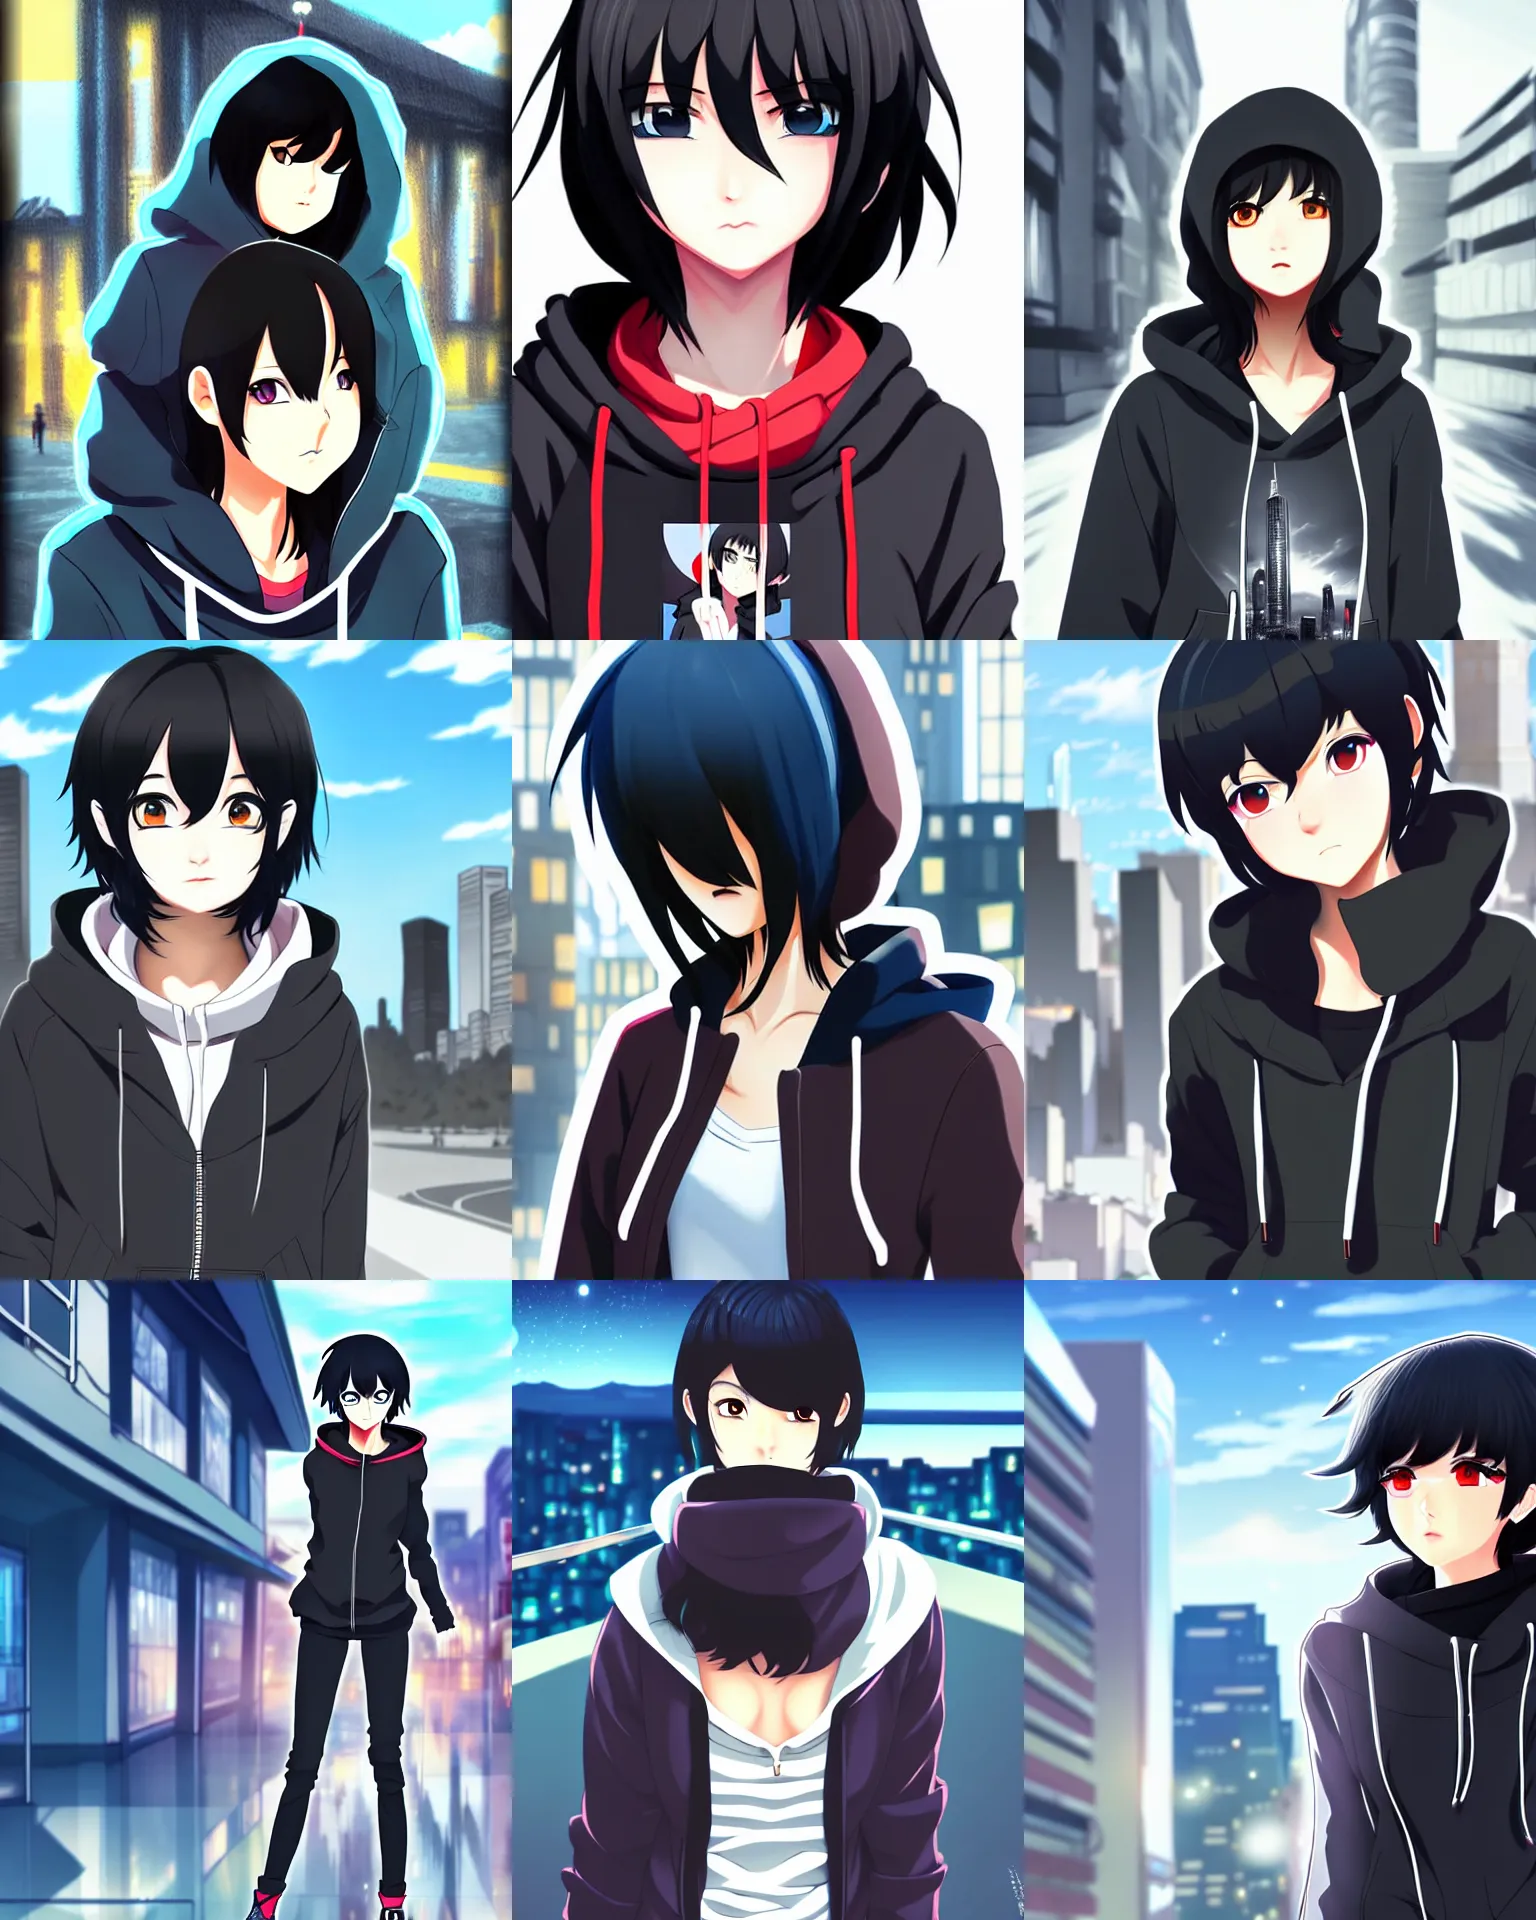 Prompt: black haired girl wearing hoodie, city bright daylight, anime epic artwork, shinkai makoto